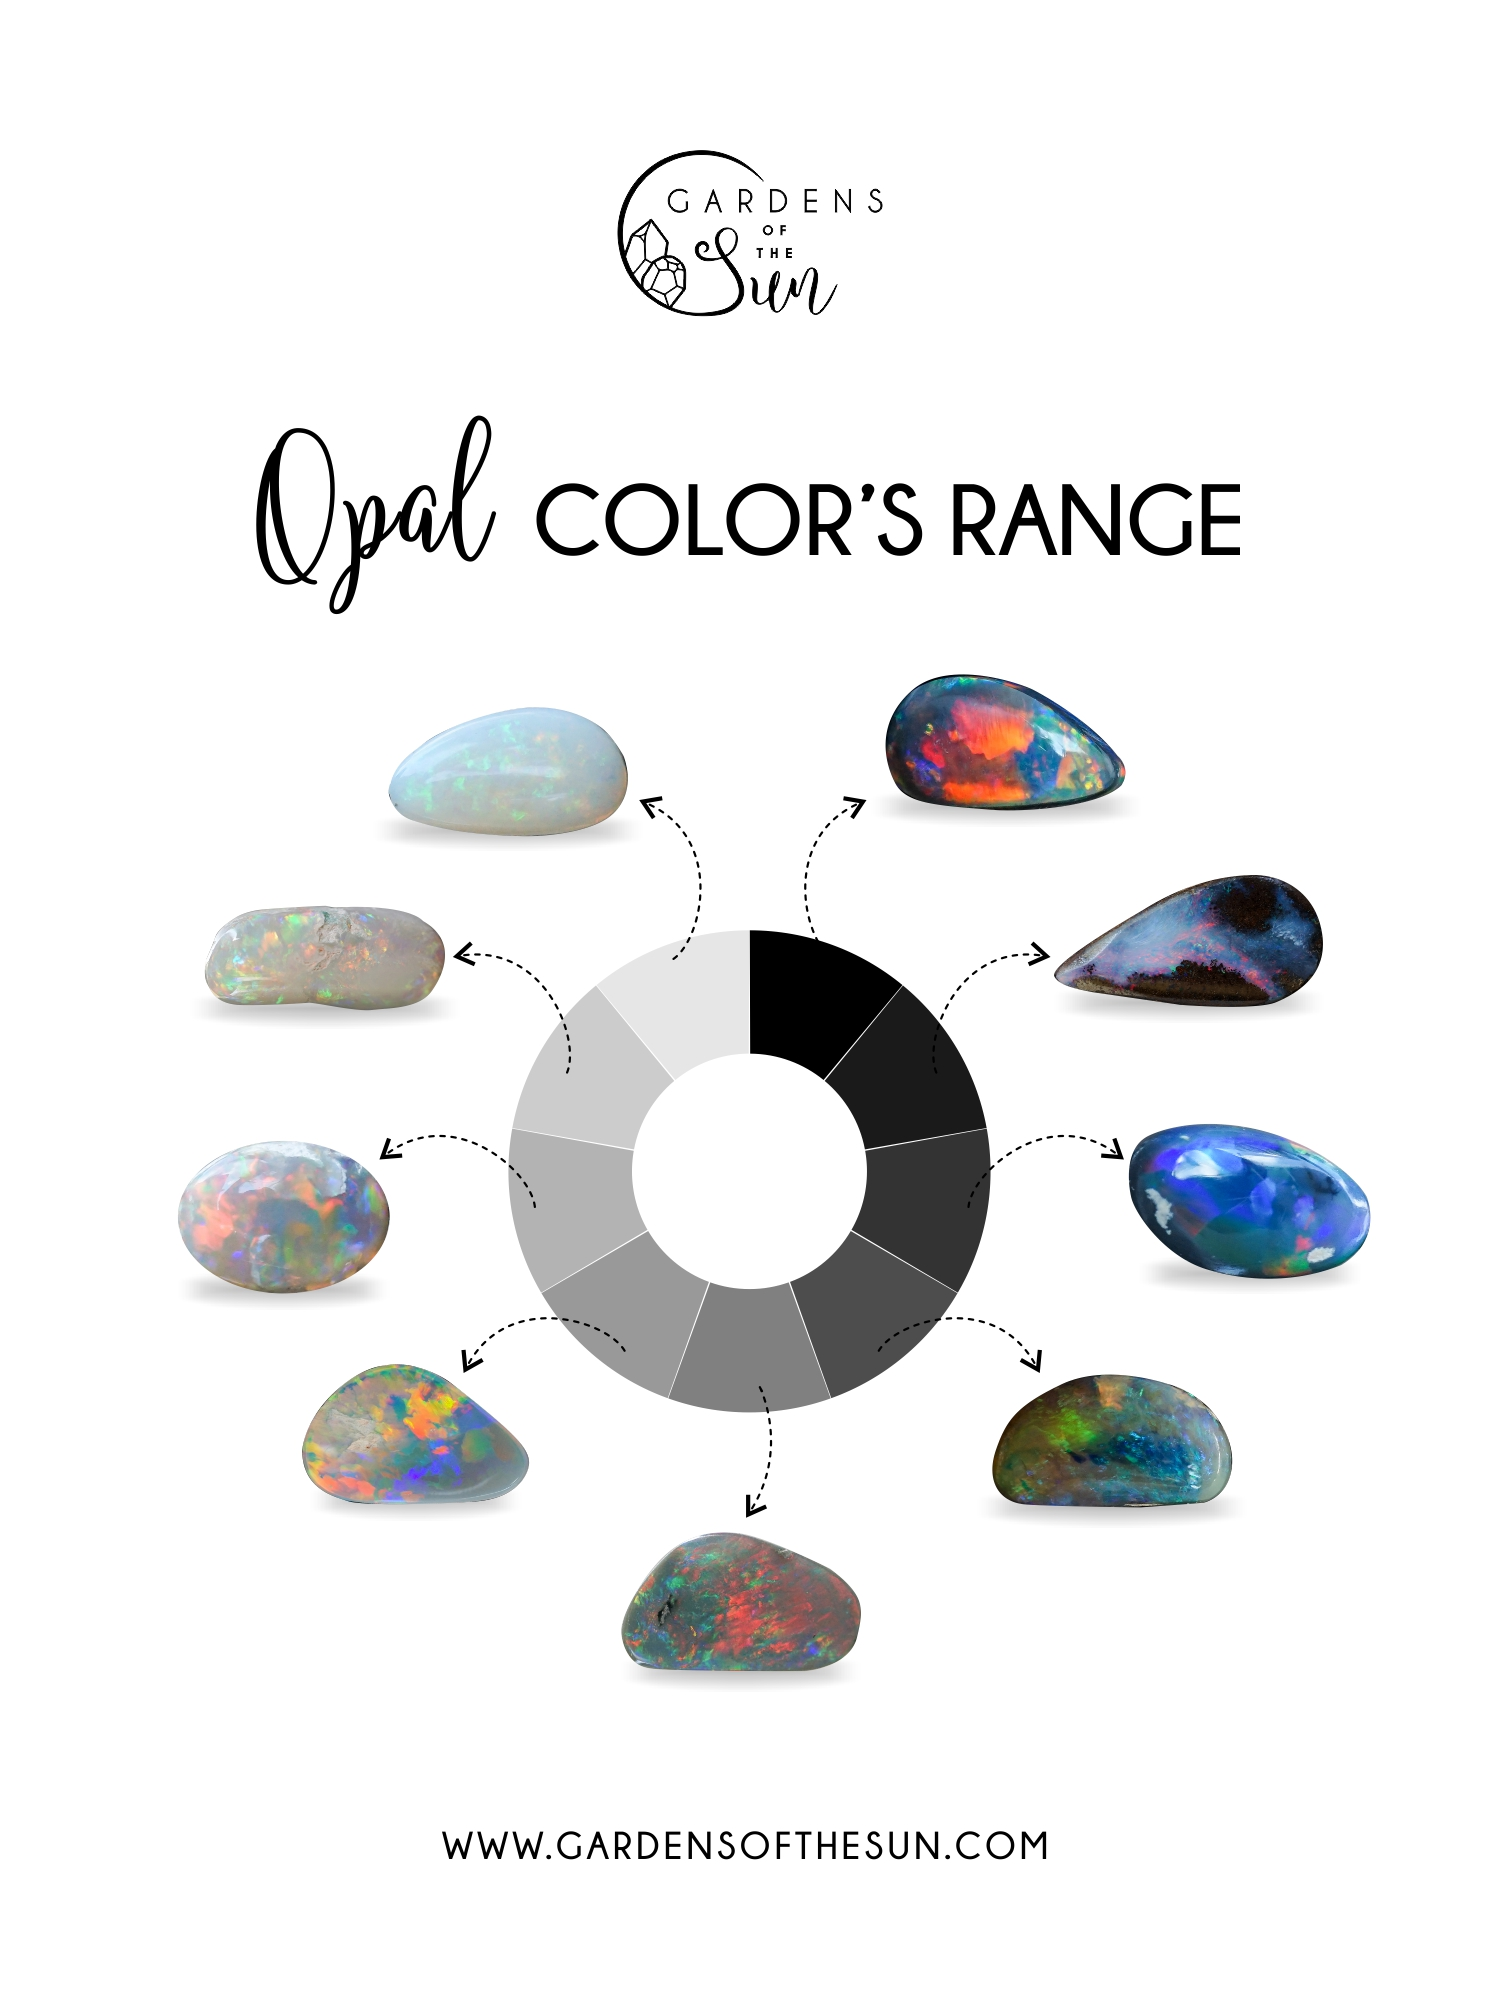 opal's body color range